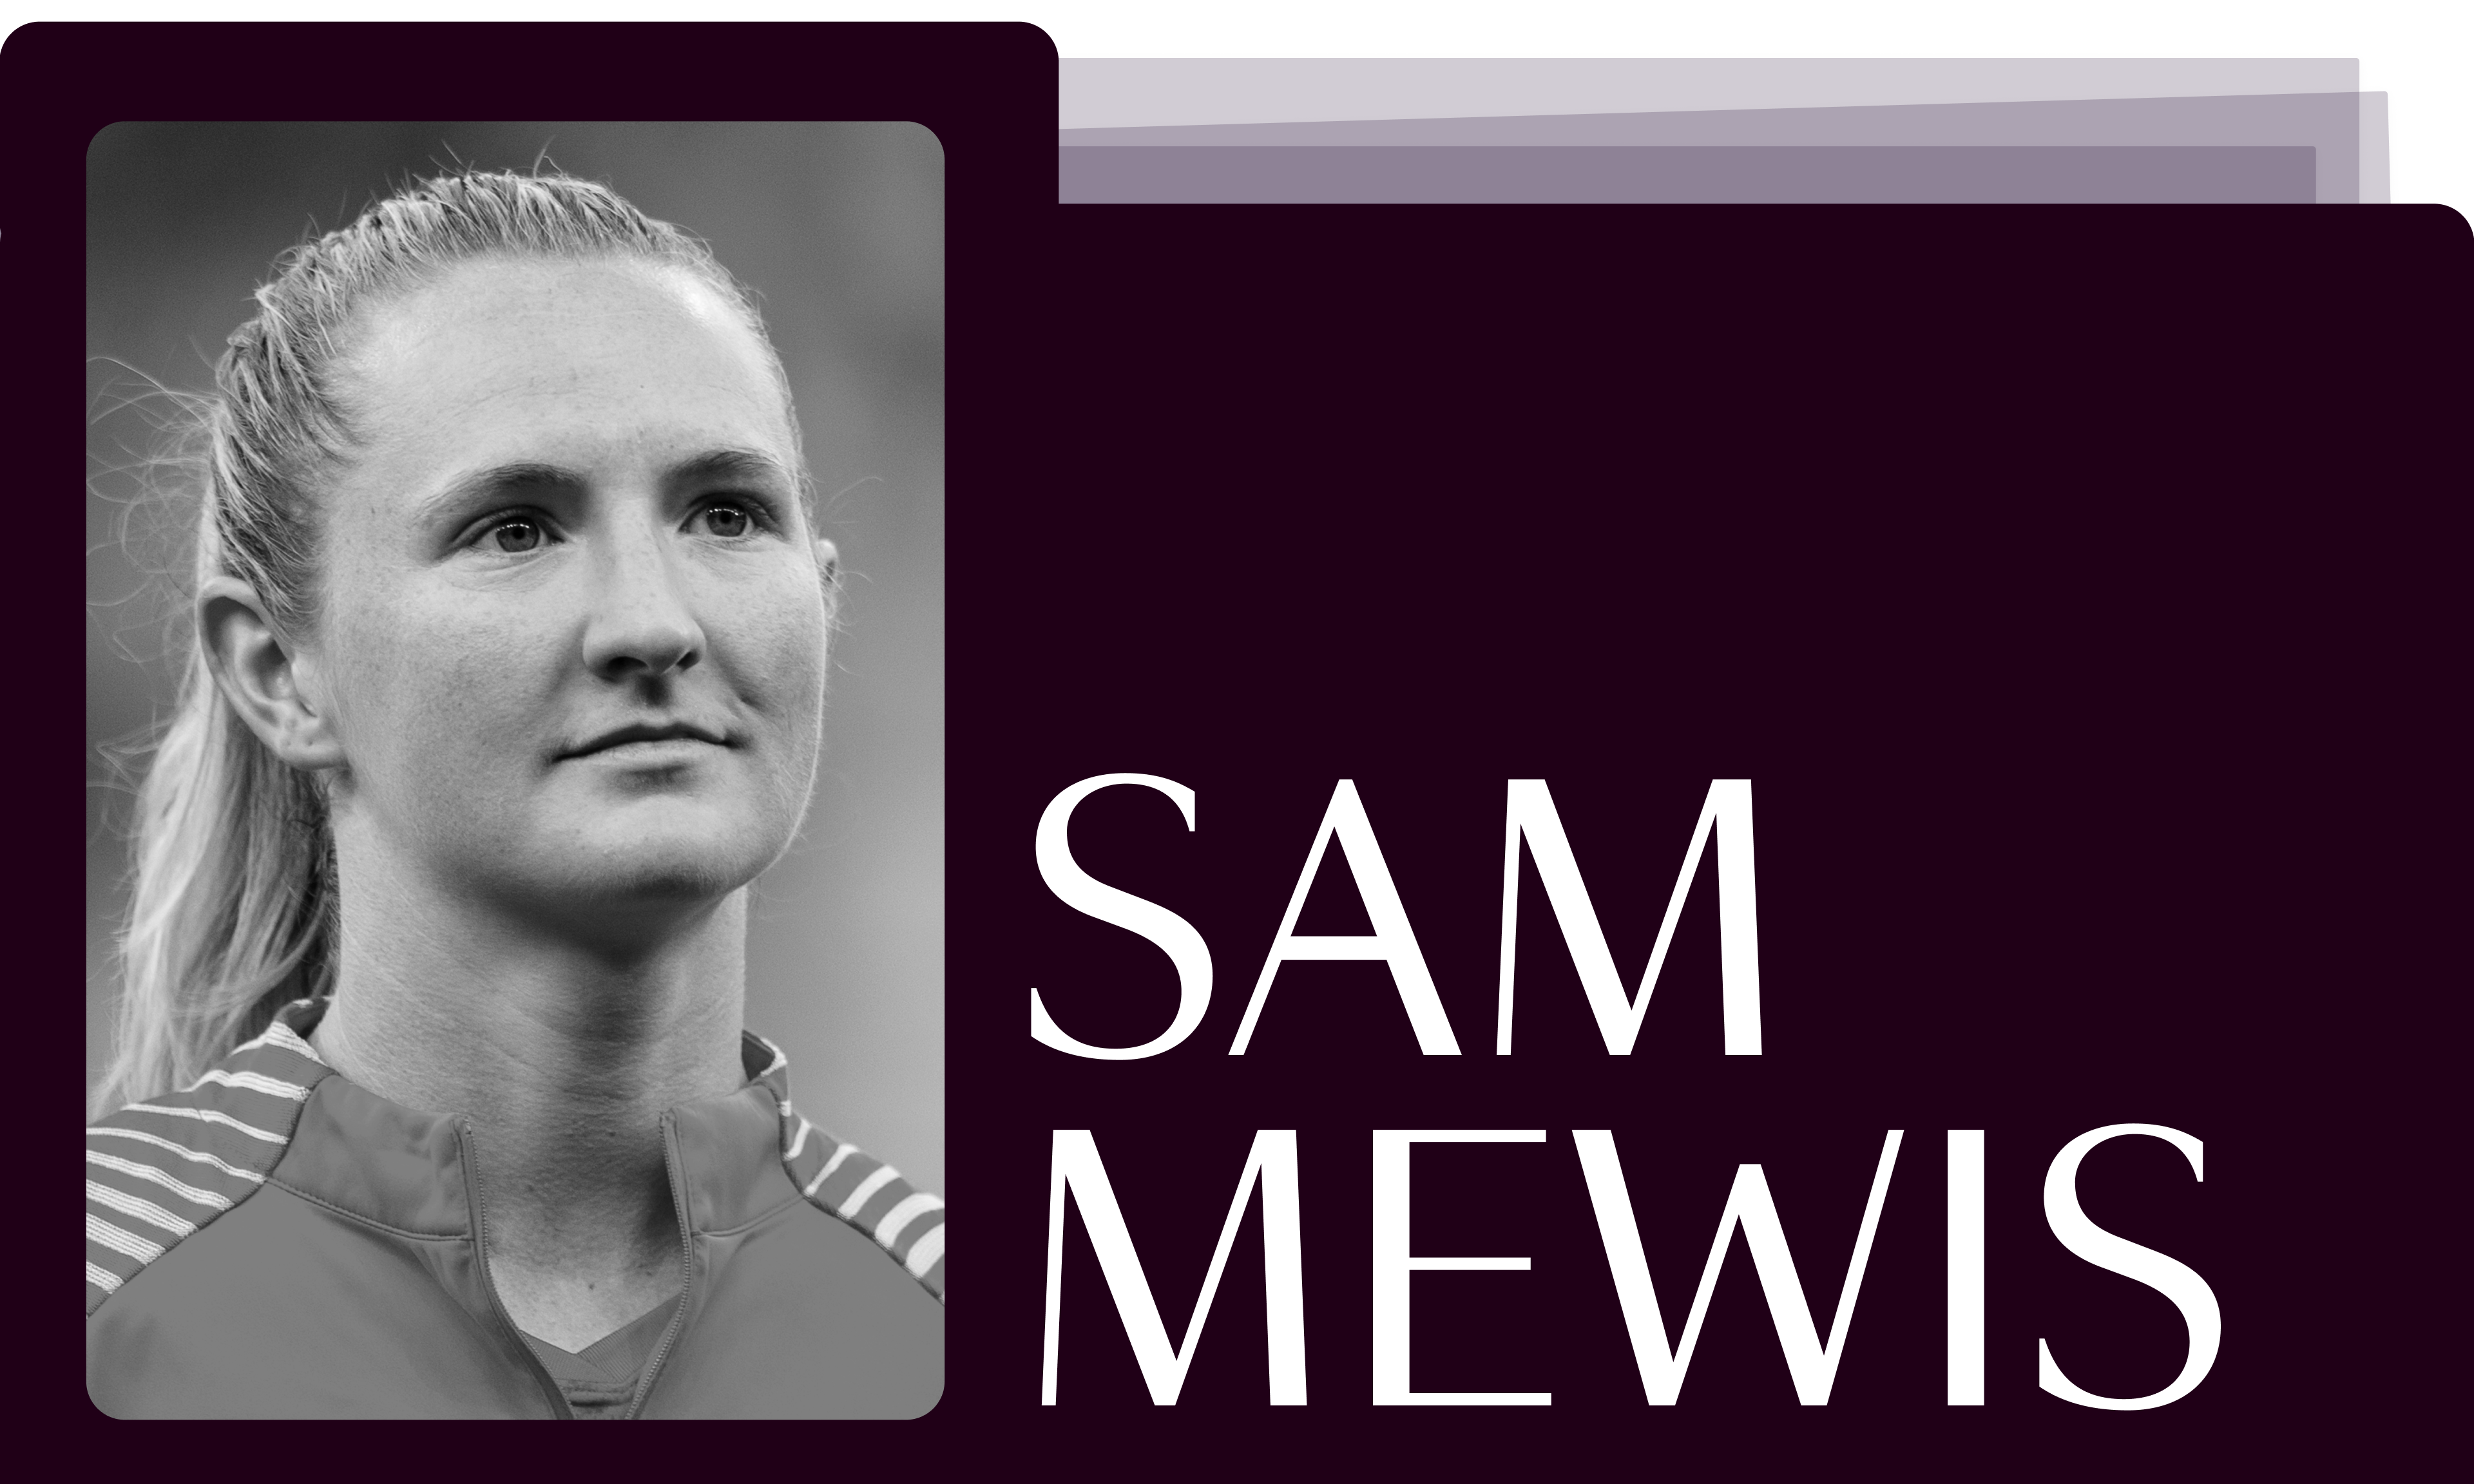 Soccer player Sam Mewis